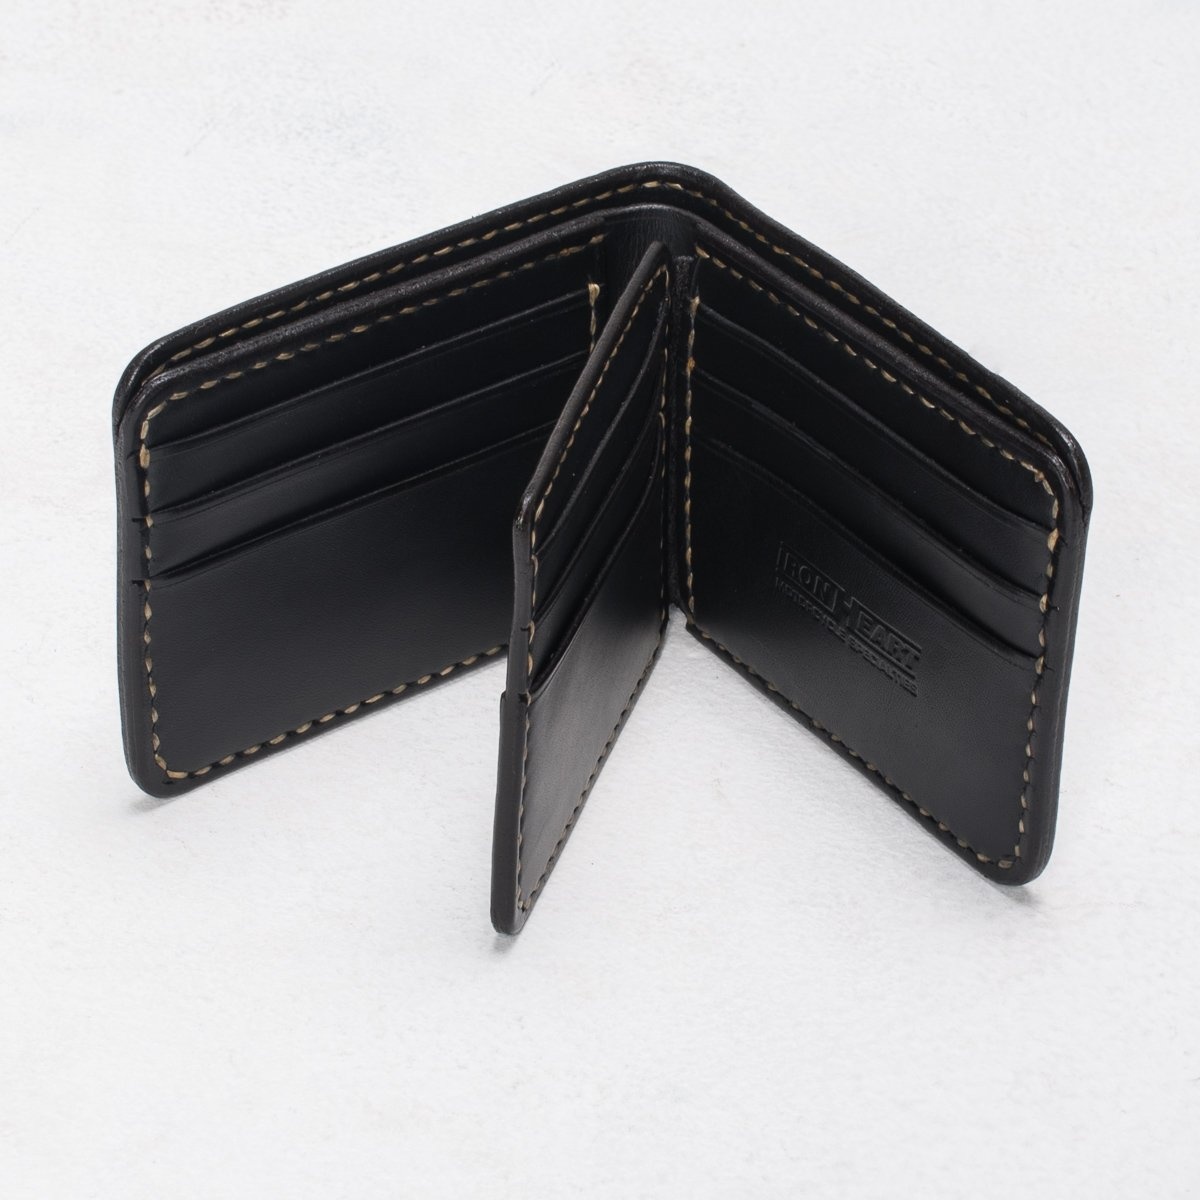 IHG-035 Calf Folding Wallet - Black or Tan - 9